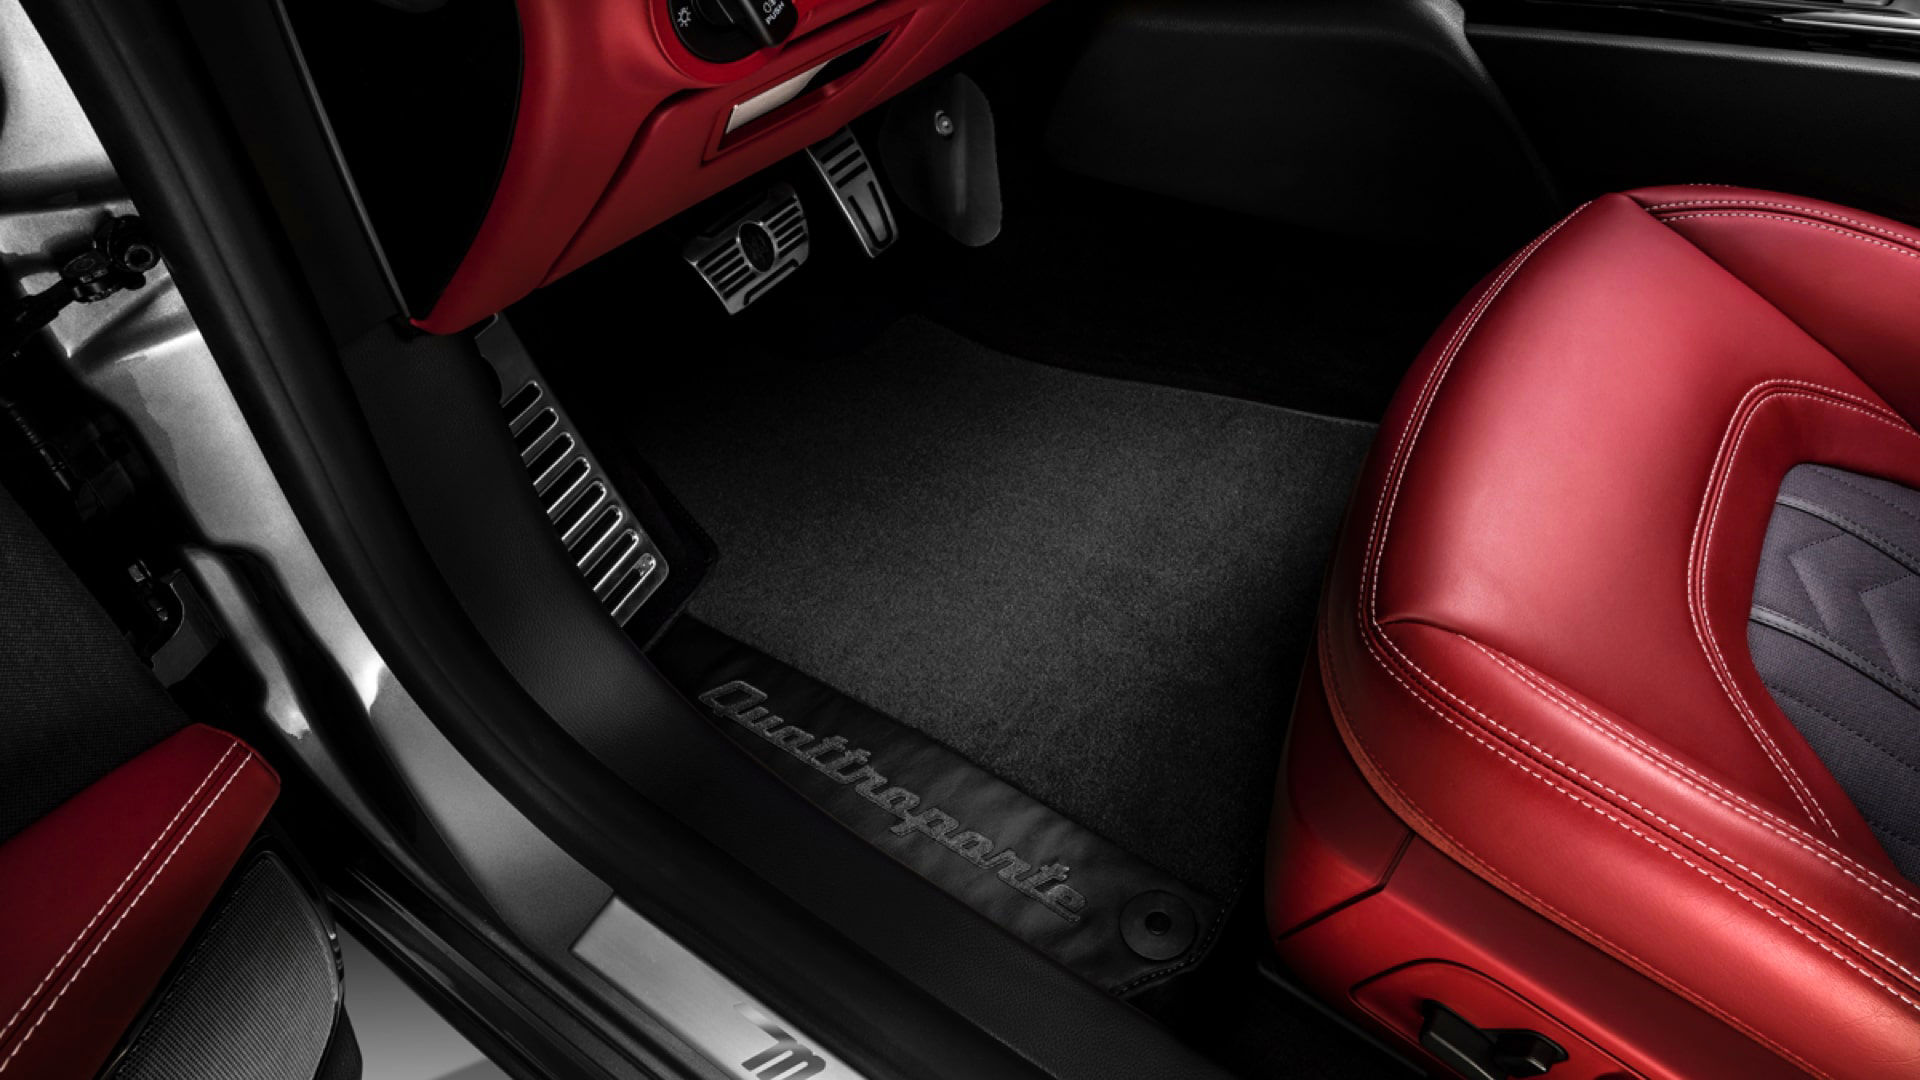 Maserati Quattroporte accessories - Branded Floor Mats